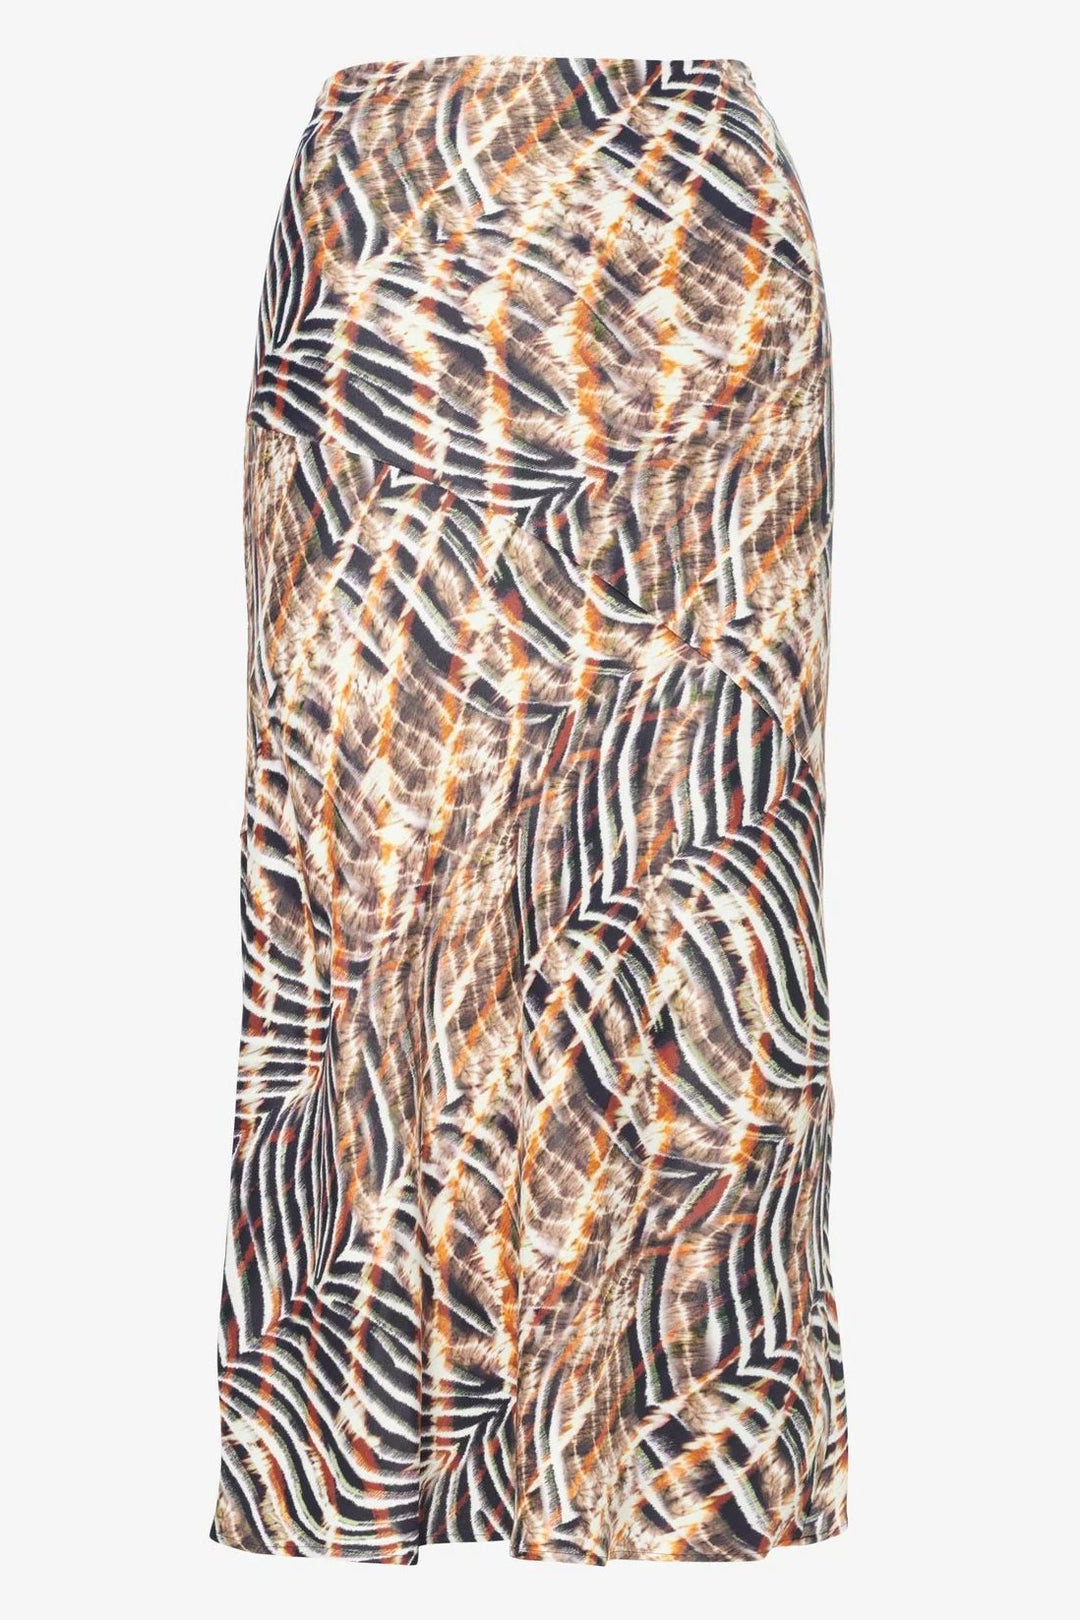 Nederdel | Lala Berlin Skirt Sasa, zebra shibori